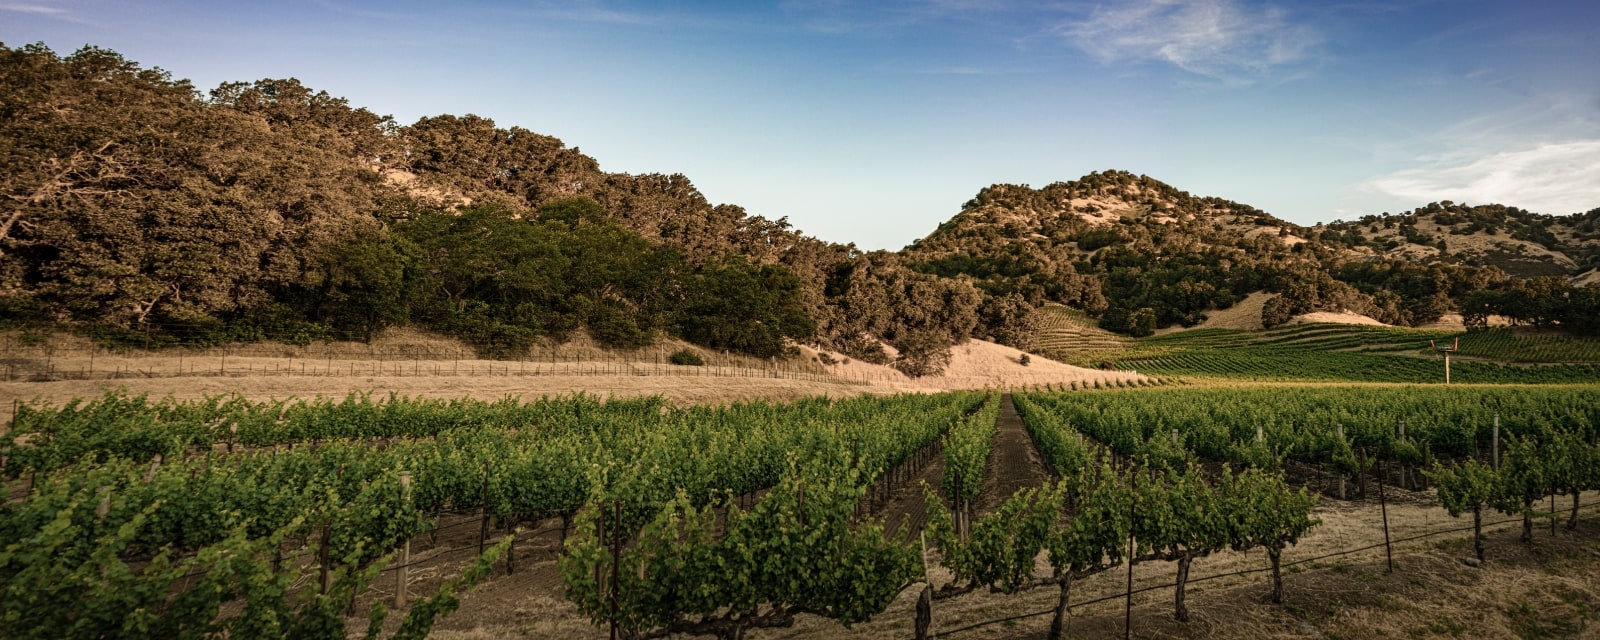 Vineyard in Napa Valley.